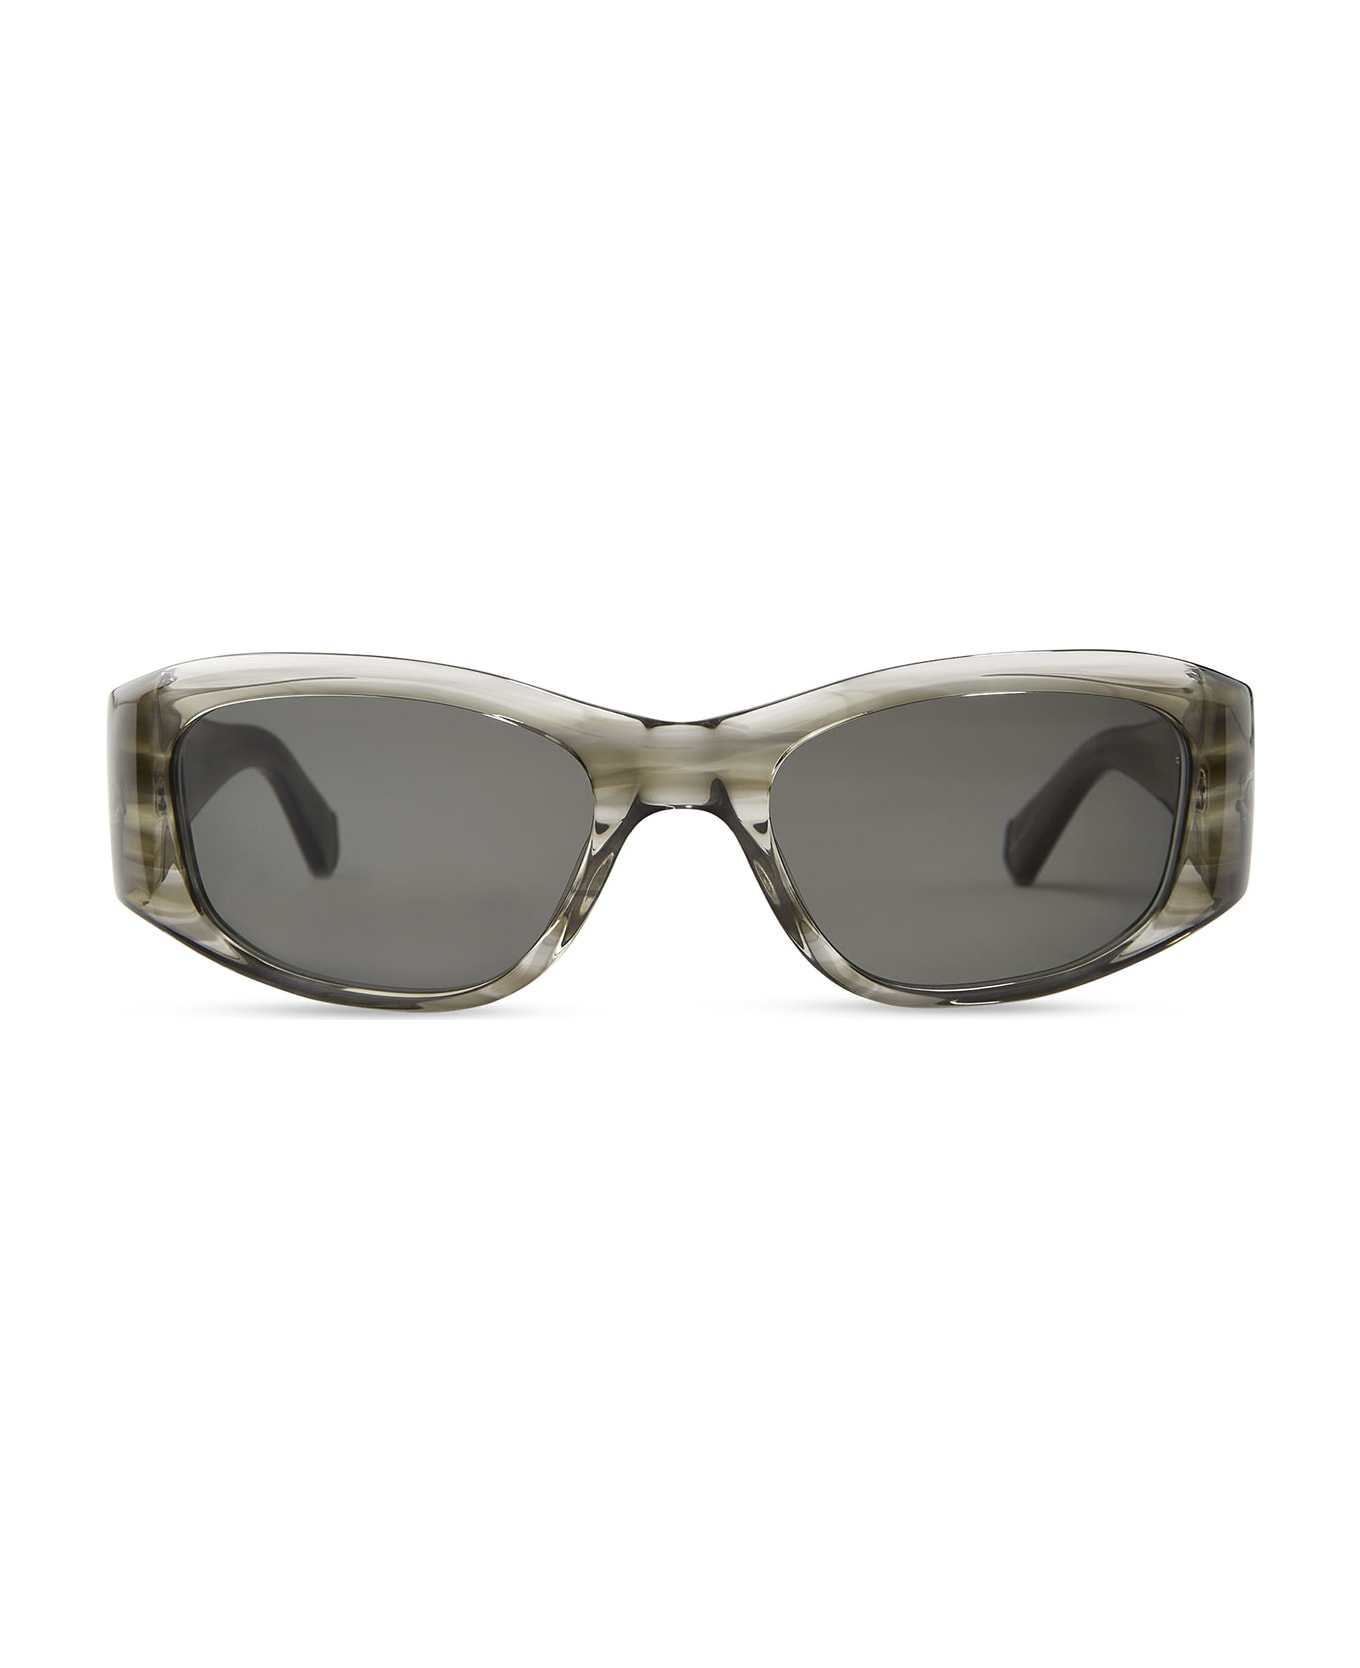 Mr. Leight Aloha Doc S Celestial Grey-pewter Sunglasses - Celestial Grey-Pewter サングラス